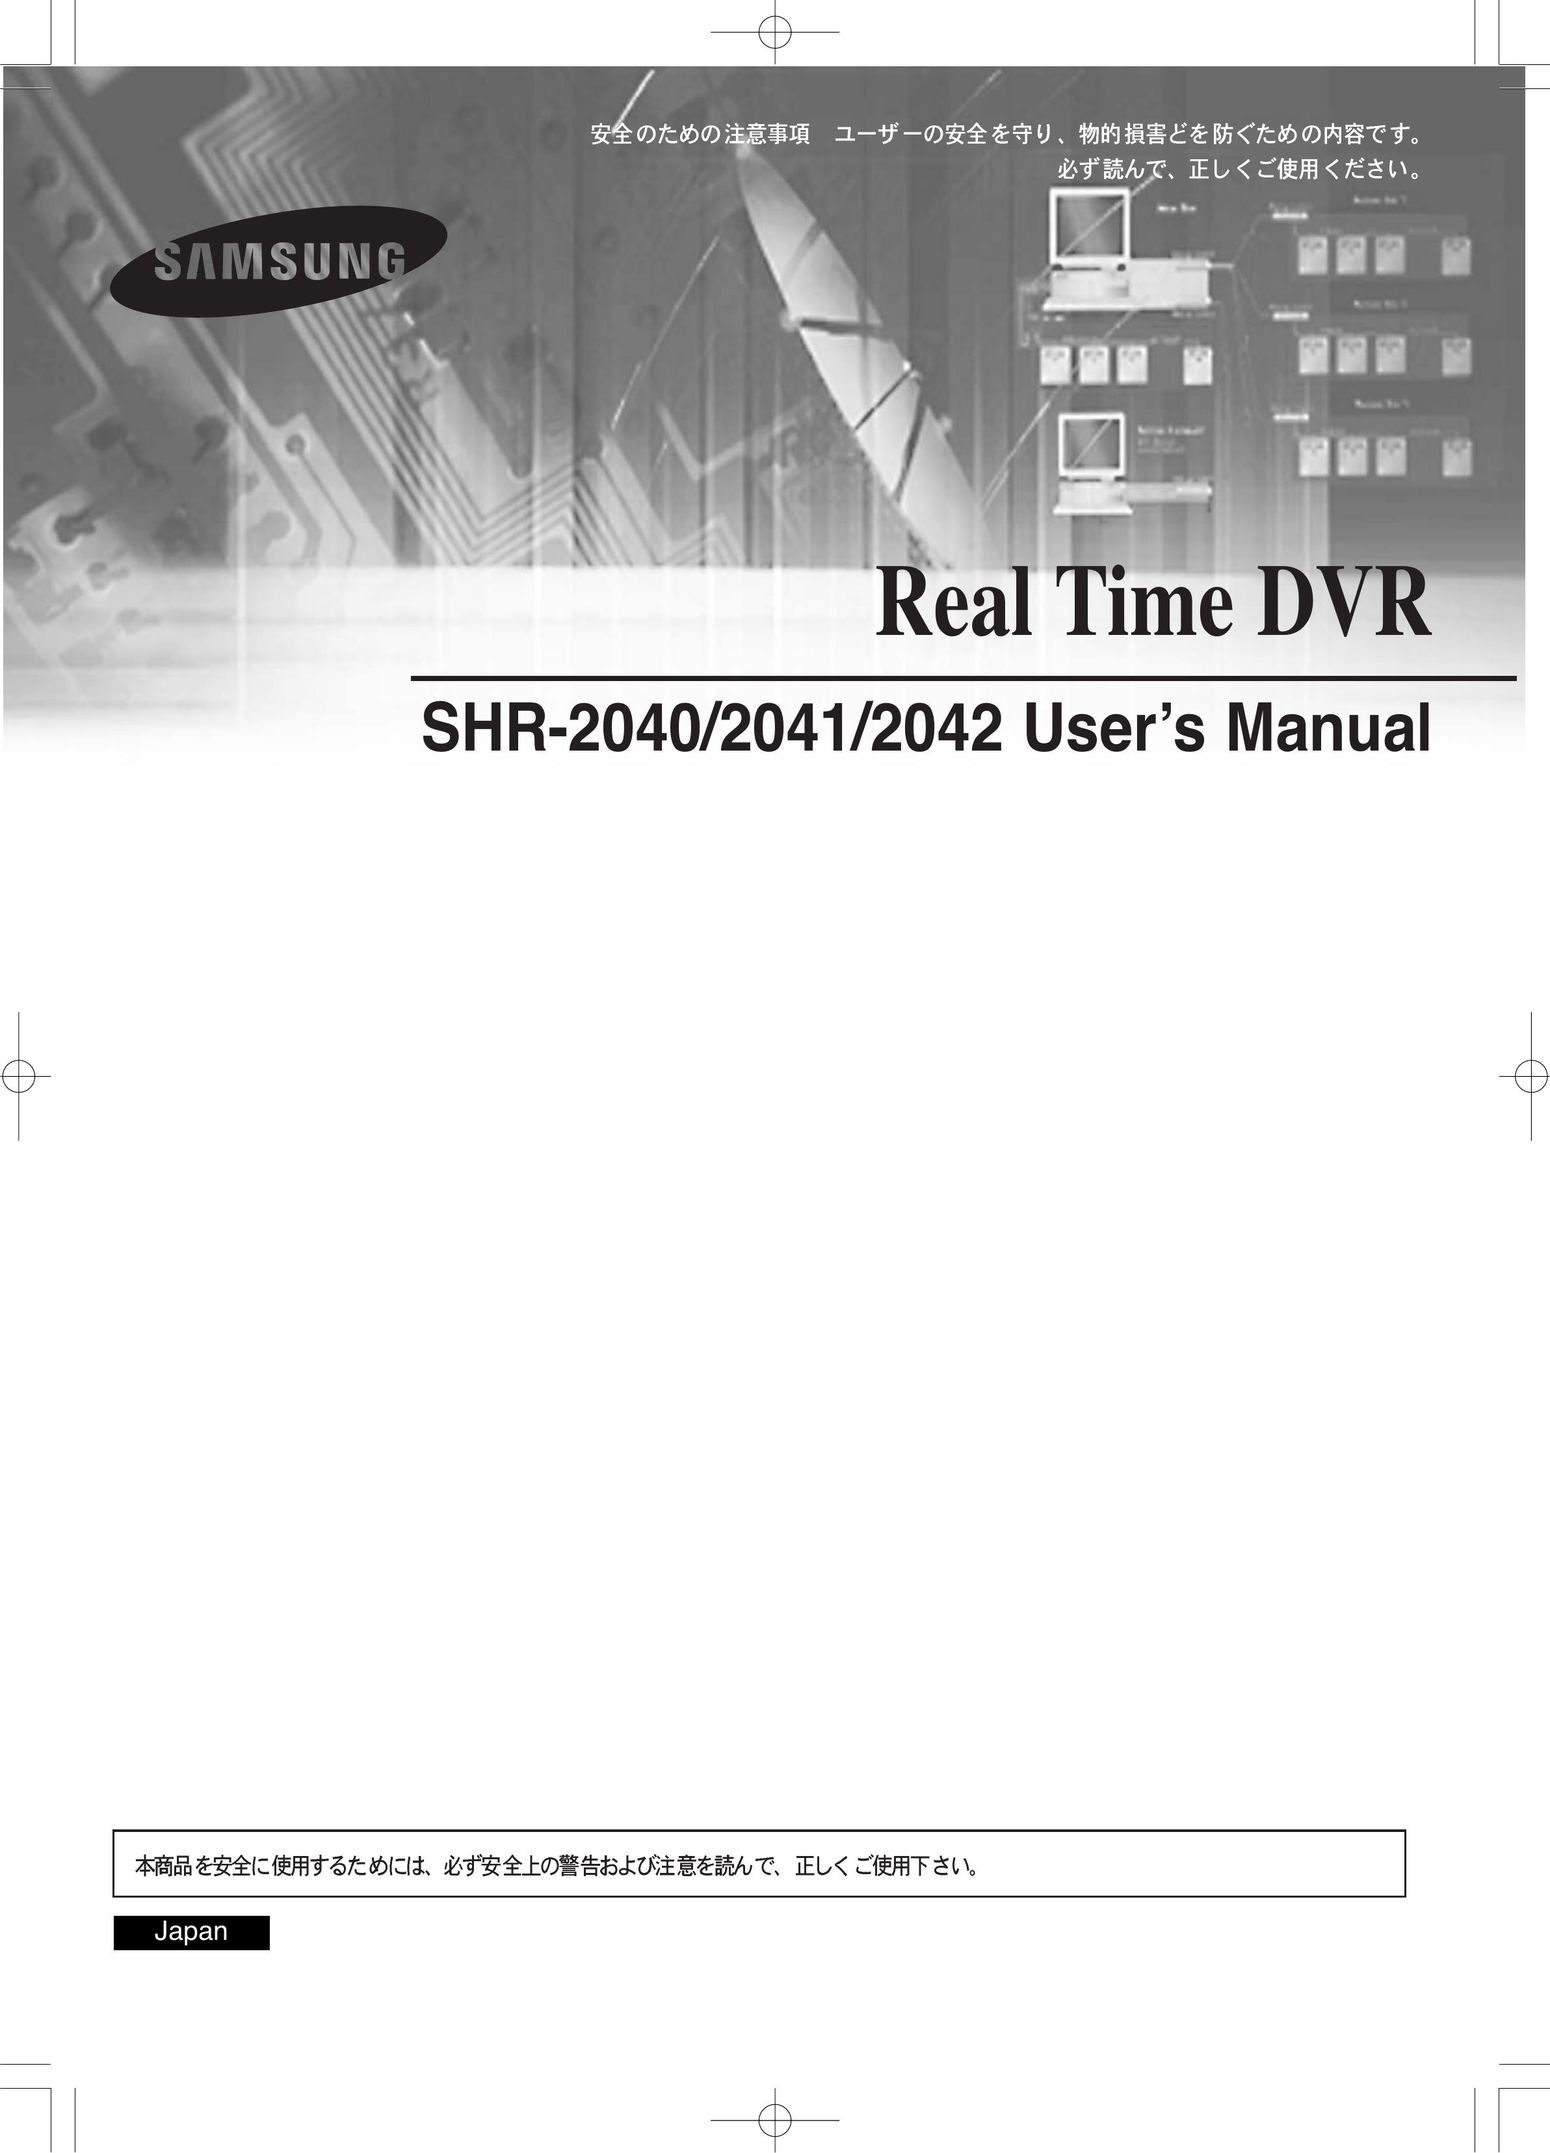 Samsung SHR 2040 DVR User Manual